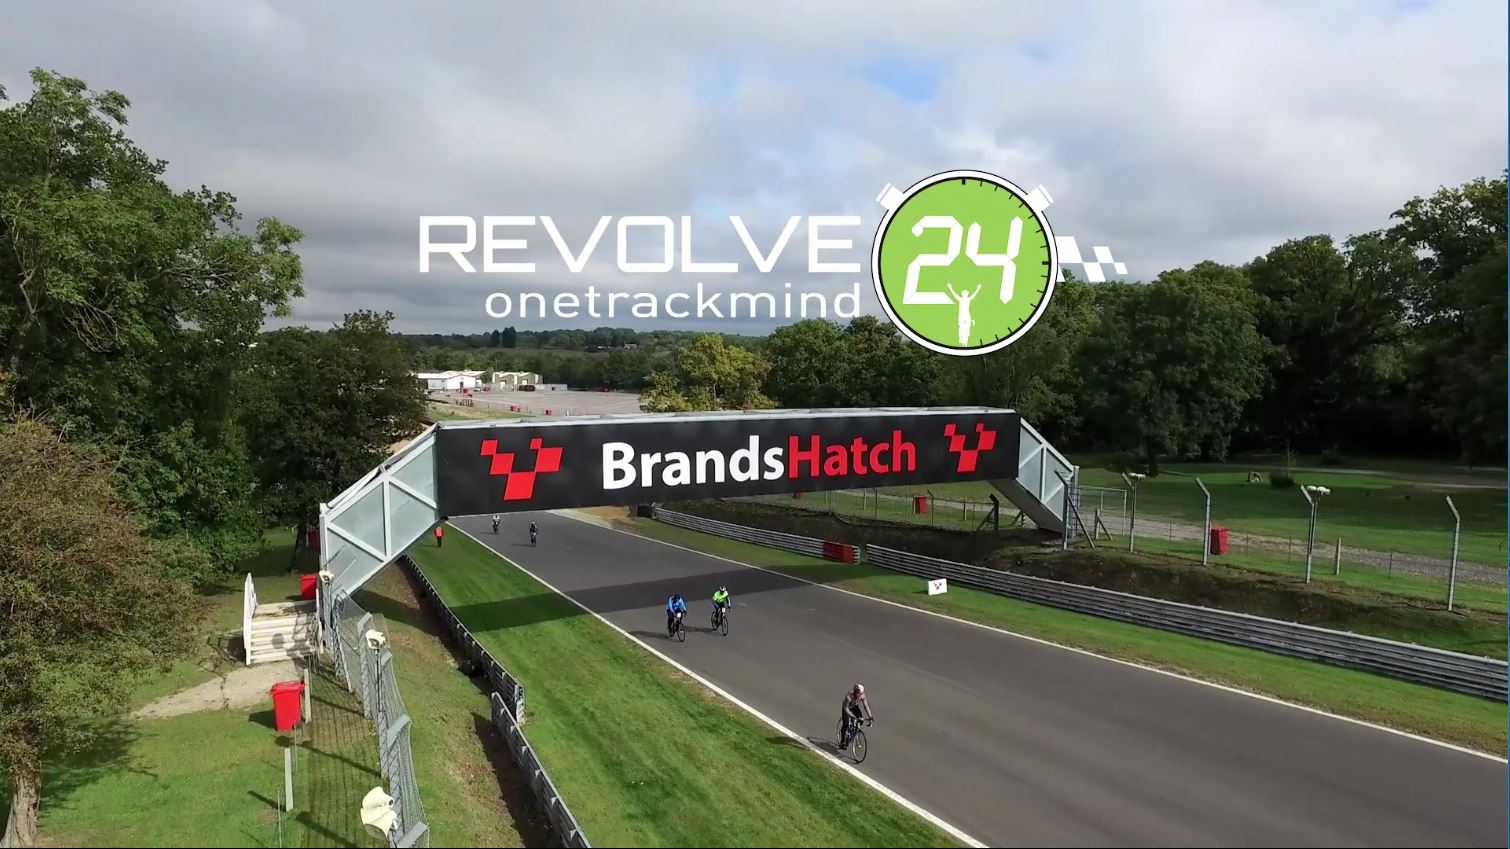 Revolve 24 event Brands Hatch